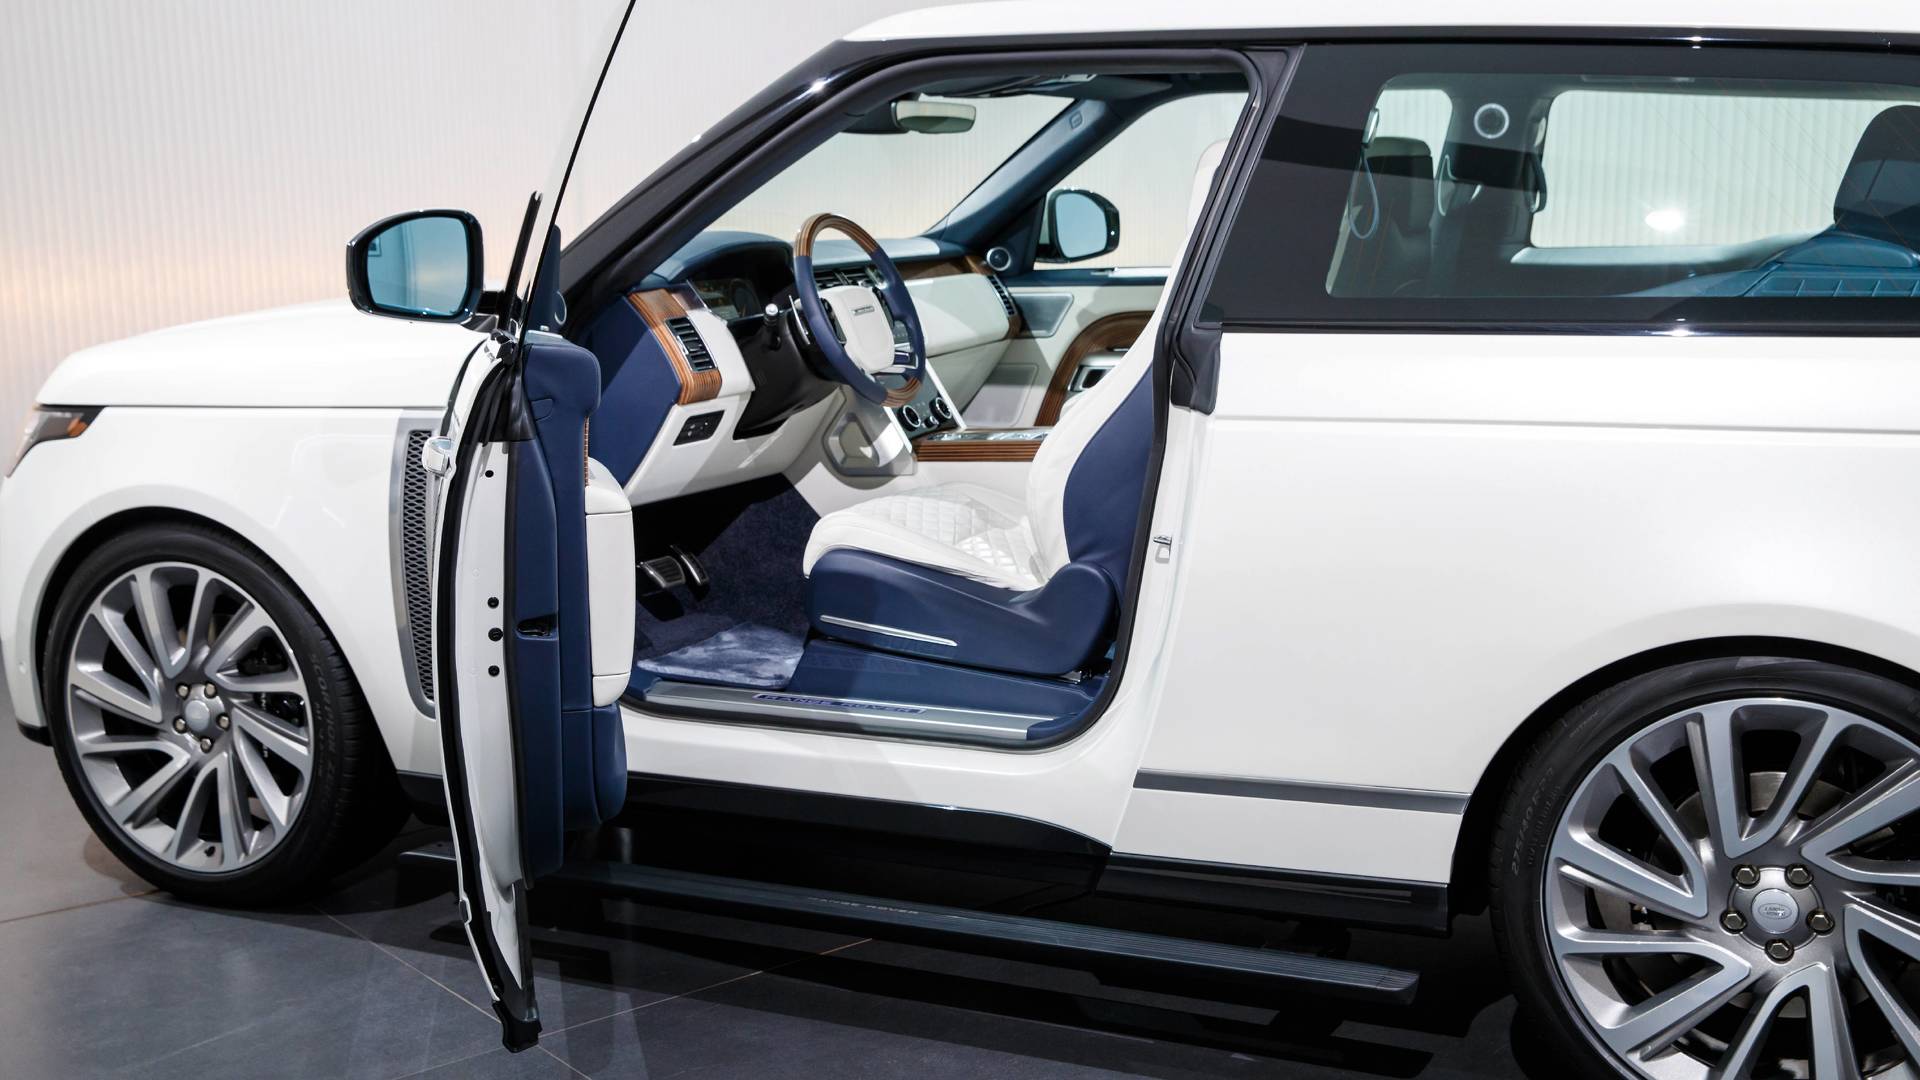 2018 range rover sv coupe geneva - رنج روور SV شاسی بلند دو درب فوق العاده گران قیمت در نمایشگاه ژنو